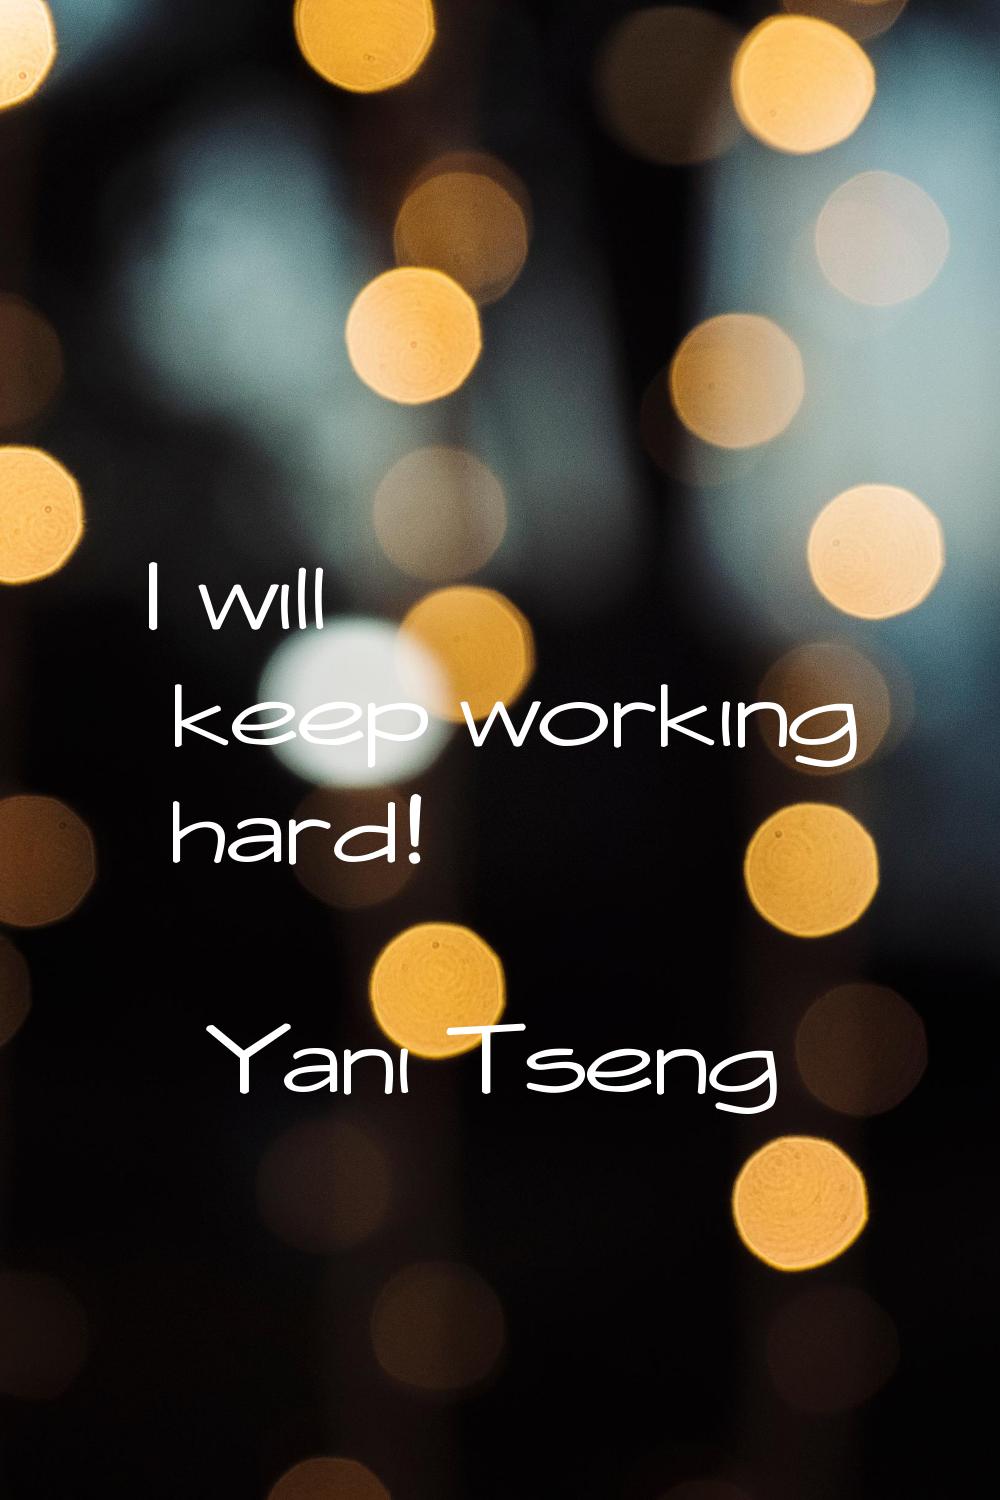 I will keep working hard!